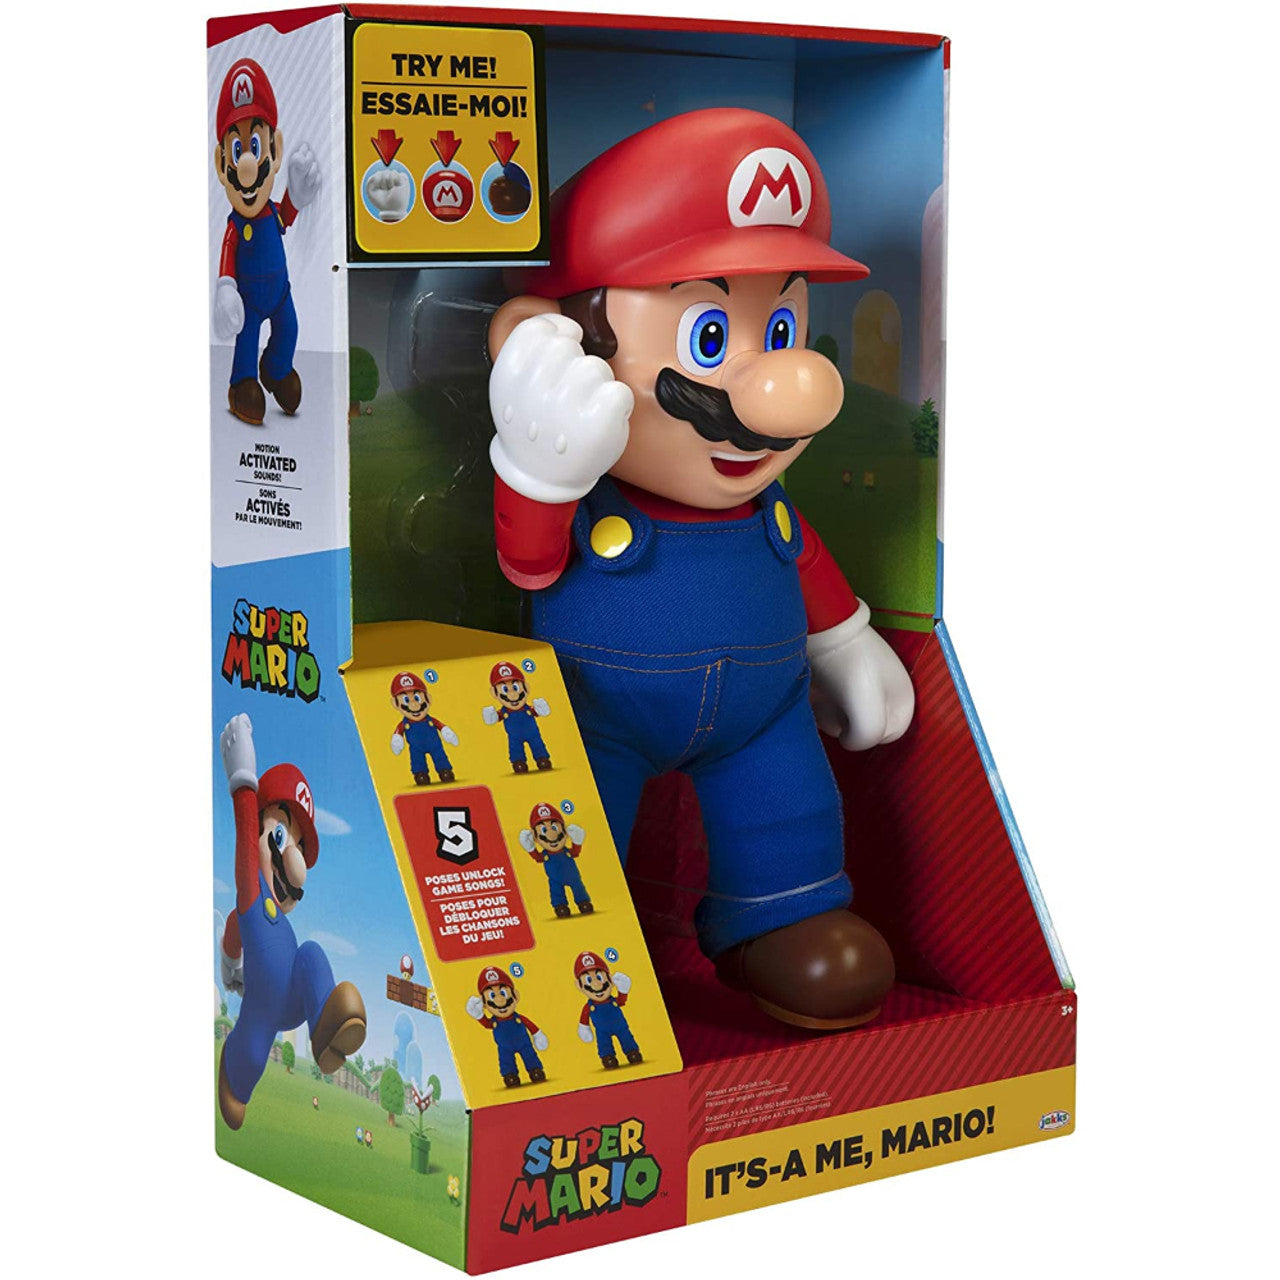 Jakks Pacific - World of Nintendo It's-A Me Mario